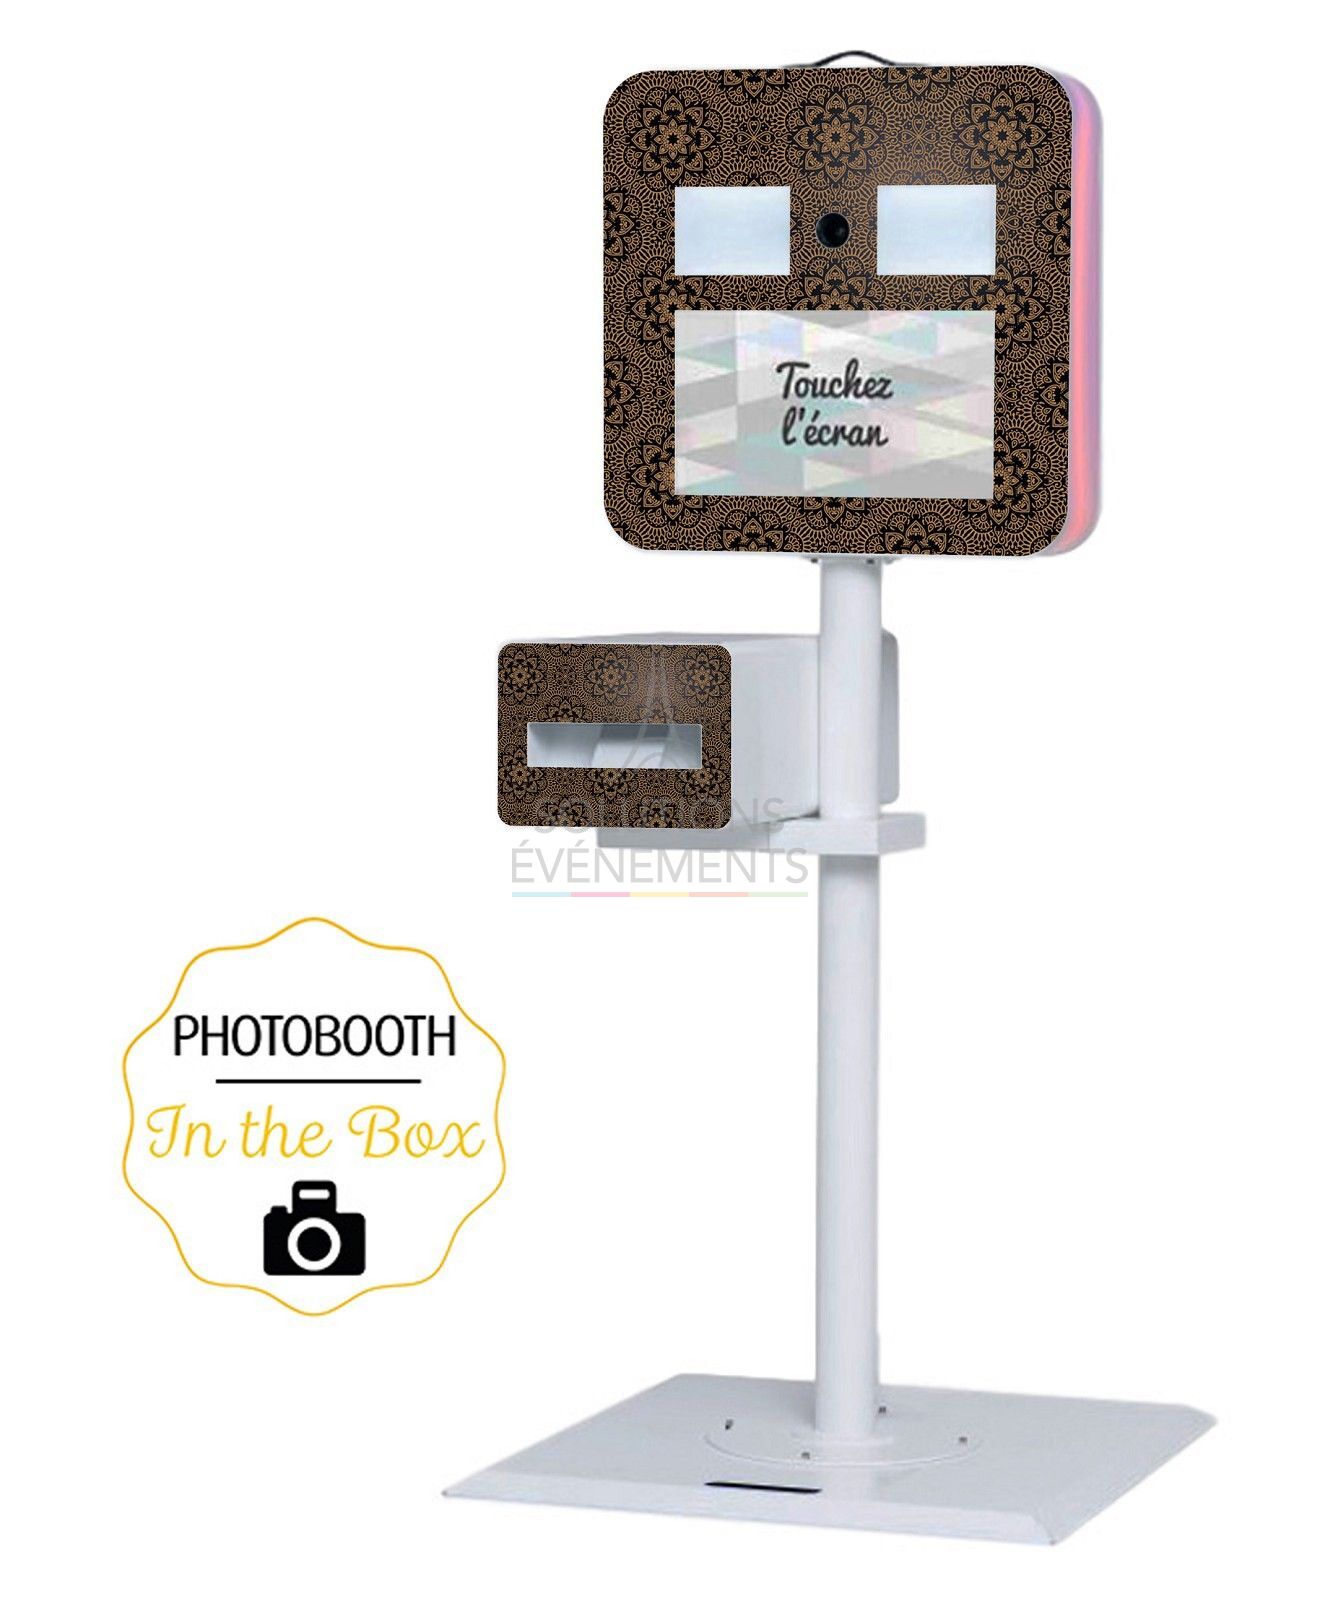 Photobooth rental with instant printing selfie terminal